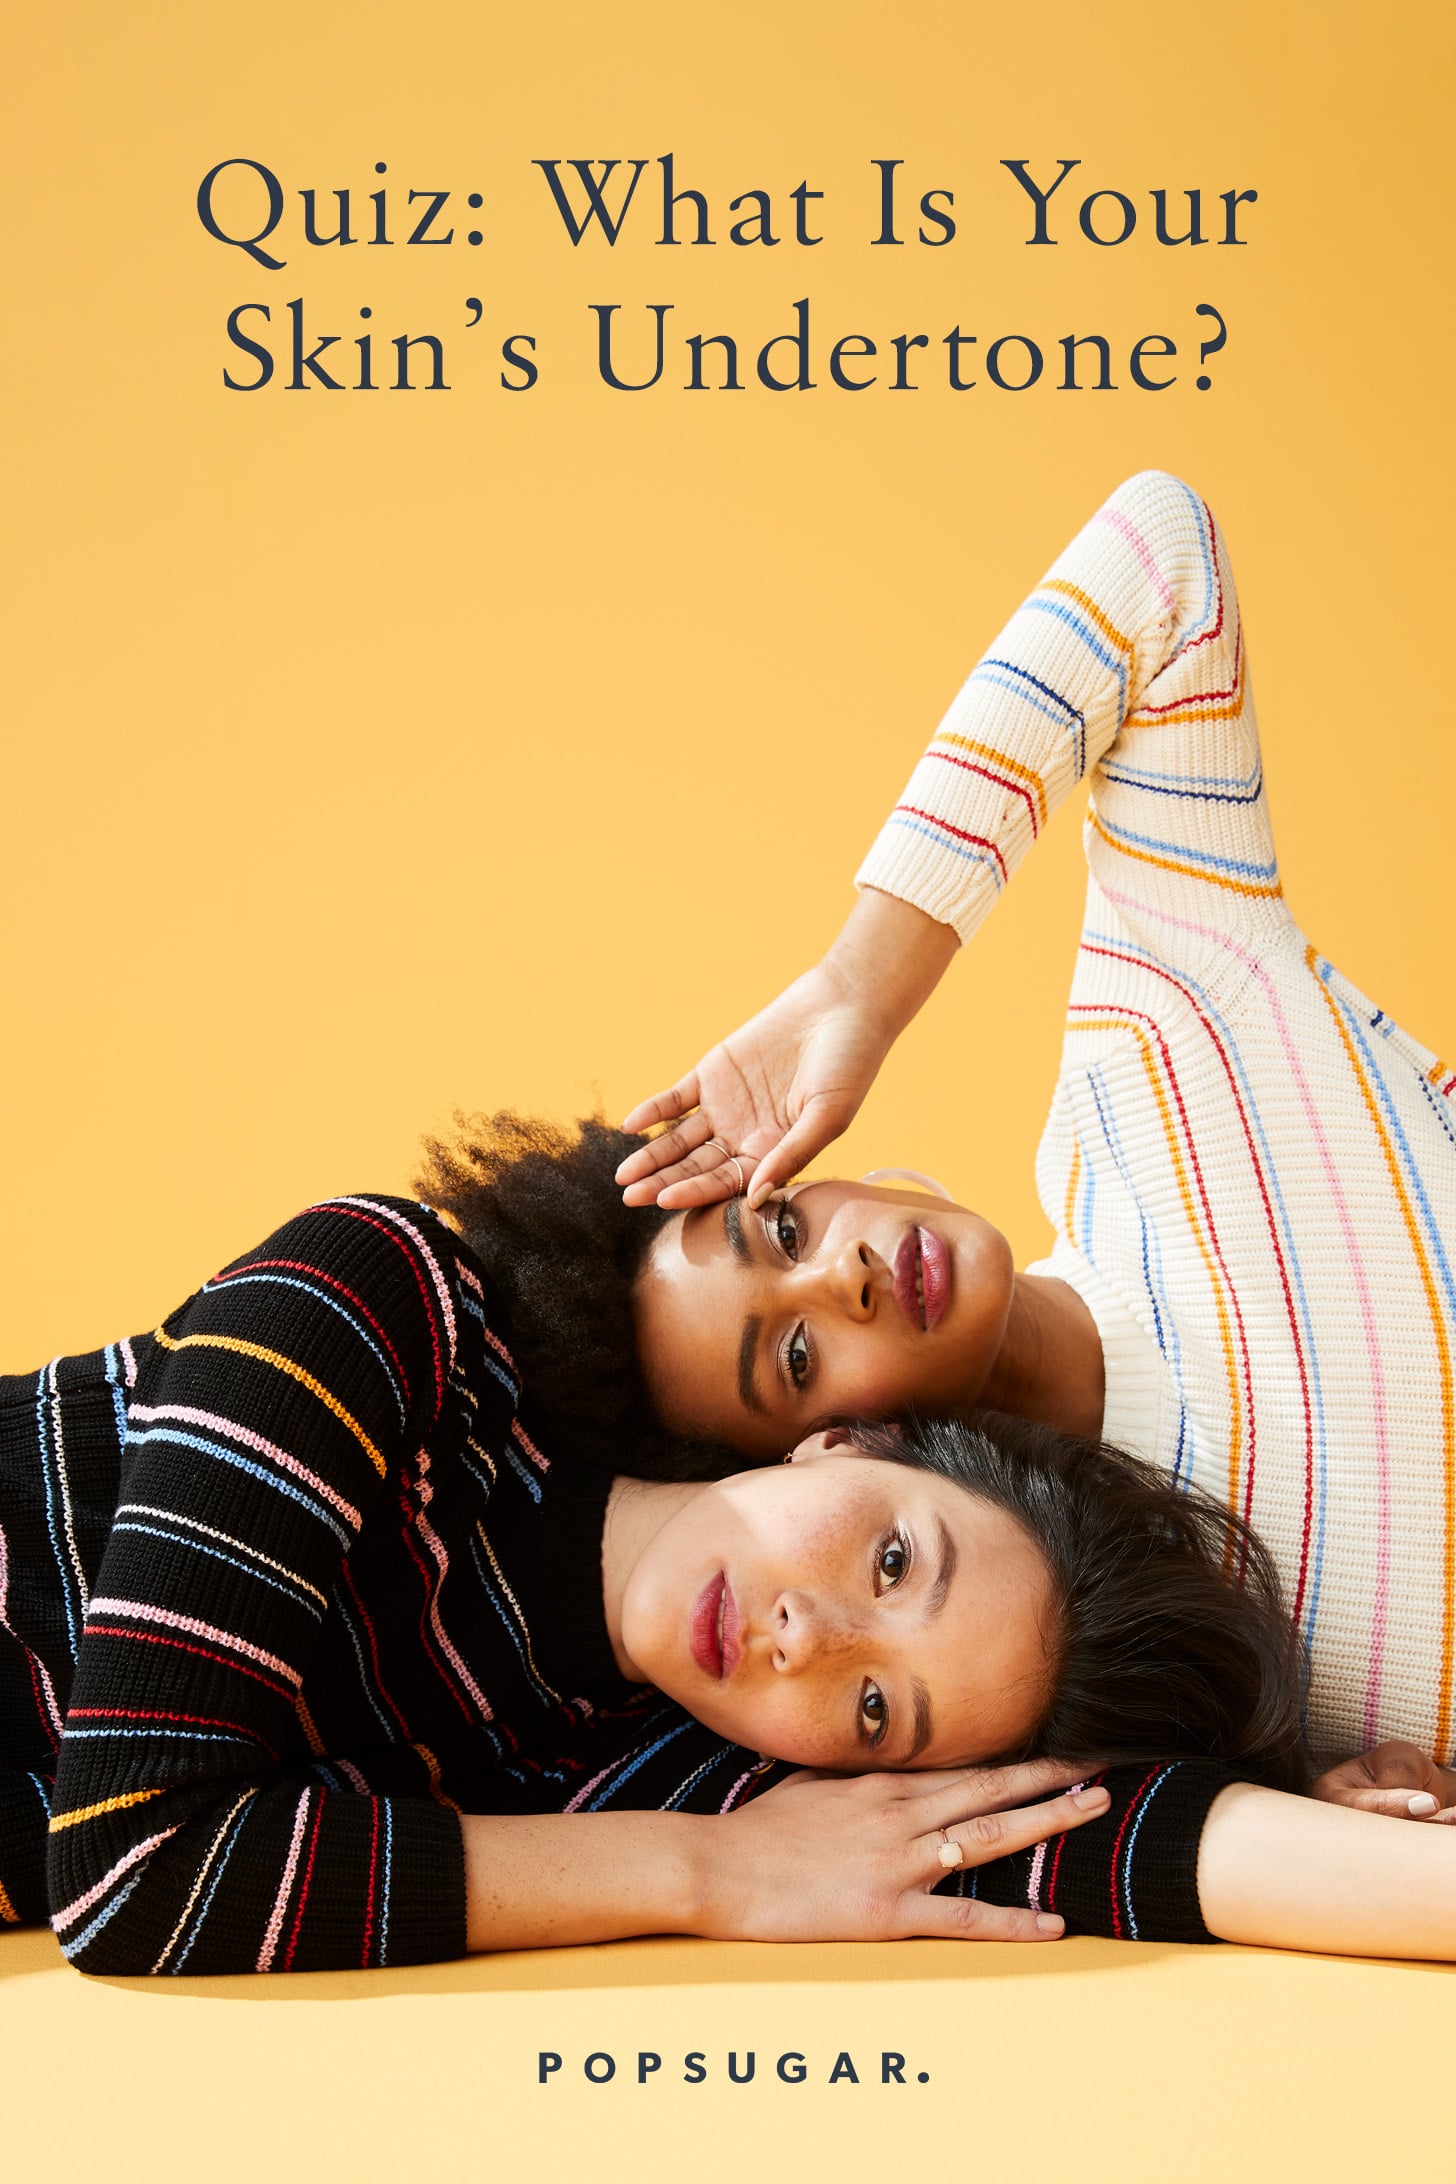 What Is My Skin Undertone? Take the Quiz | POPSUGAR Beauty